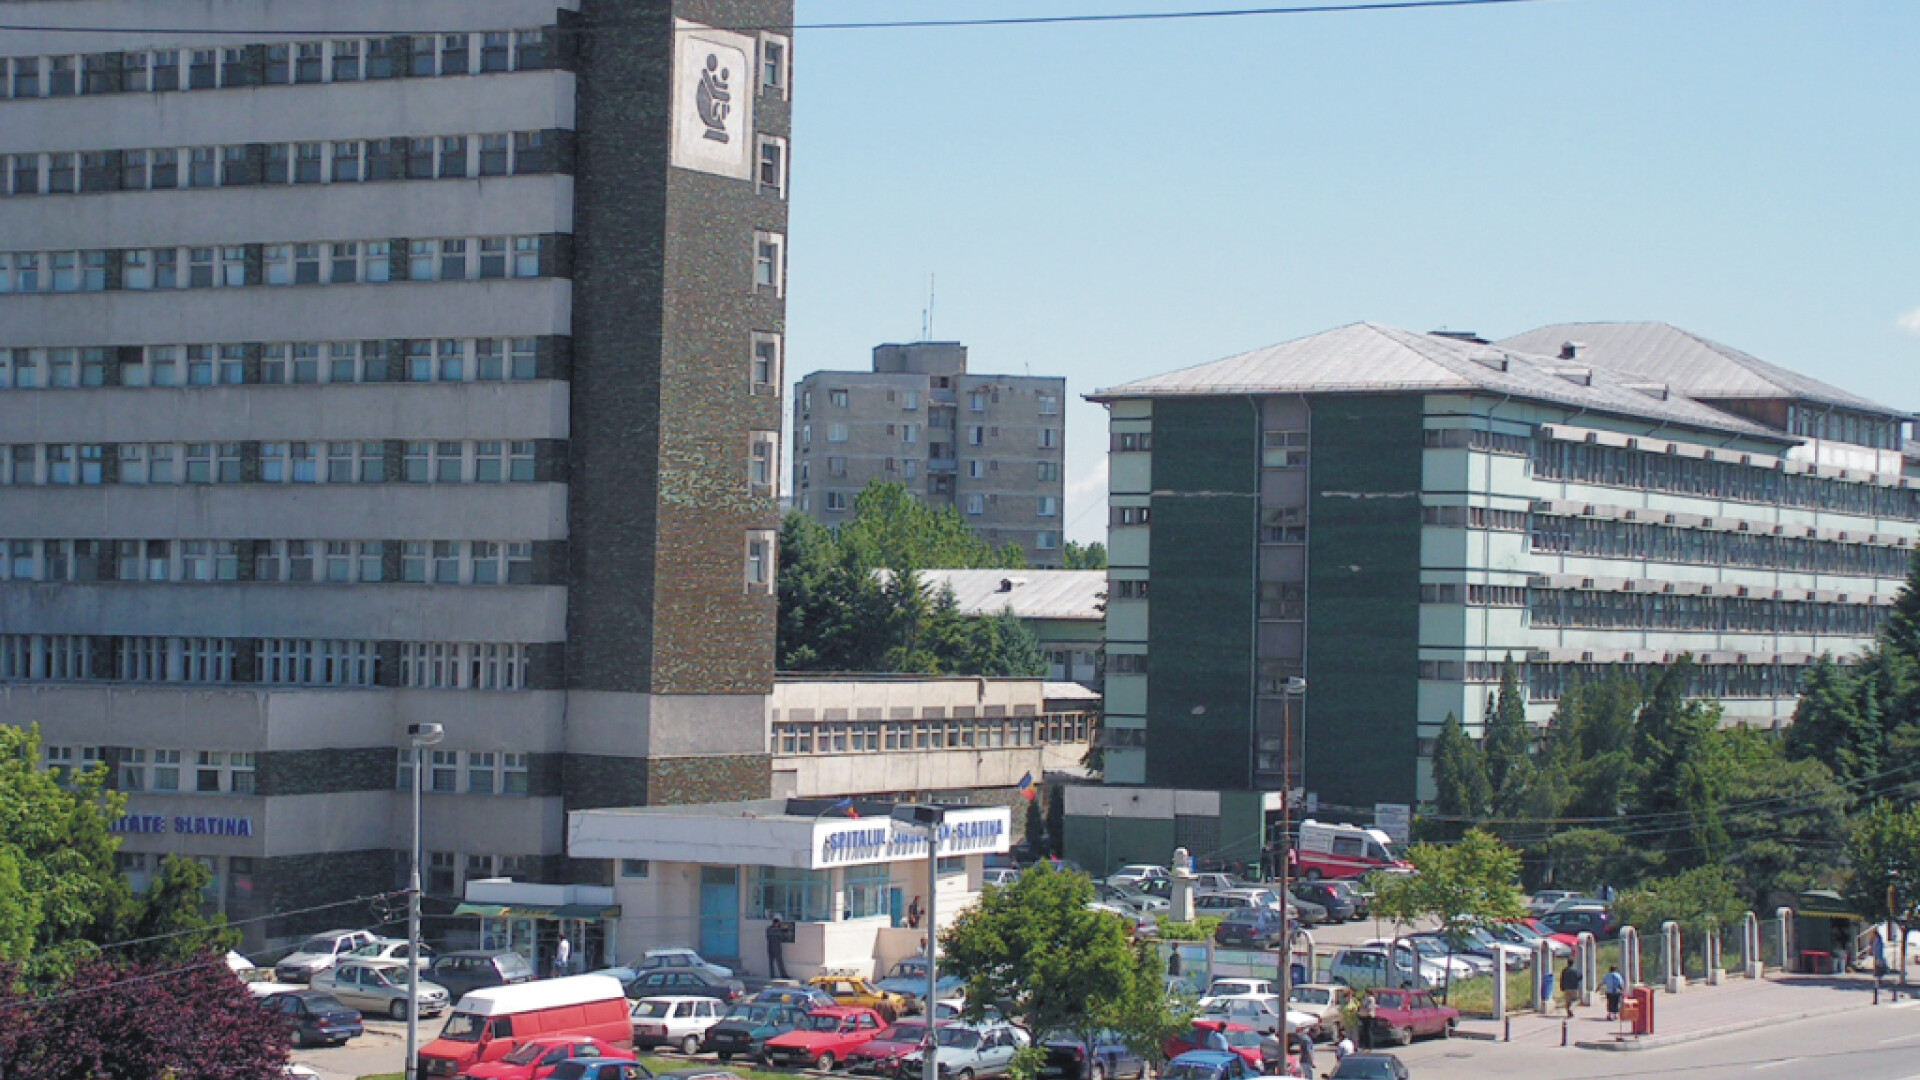 Spitalul Judetean Slatina